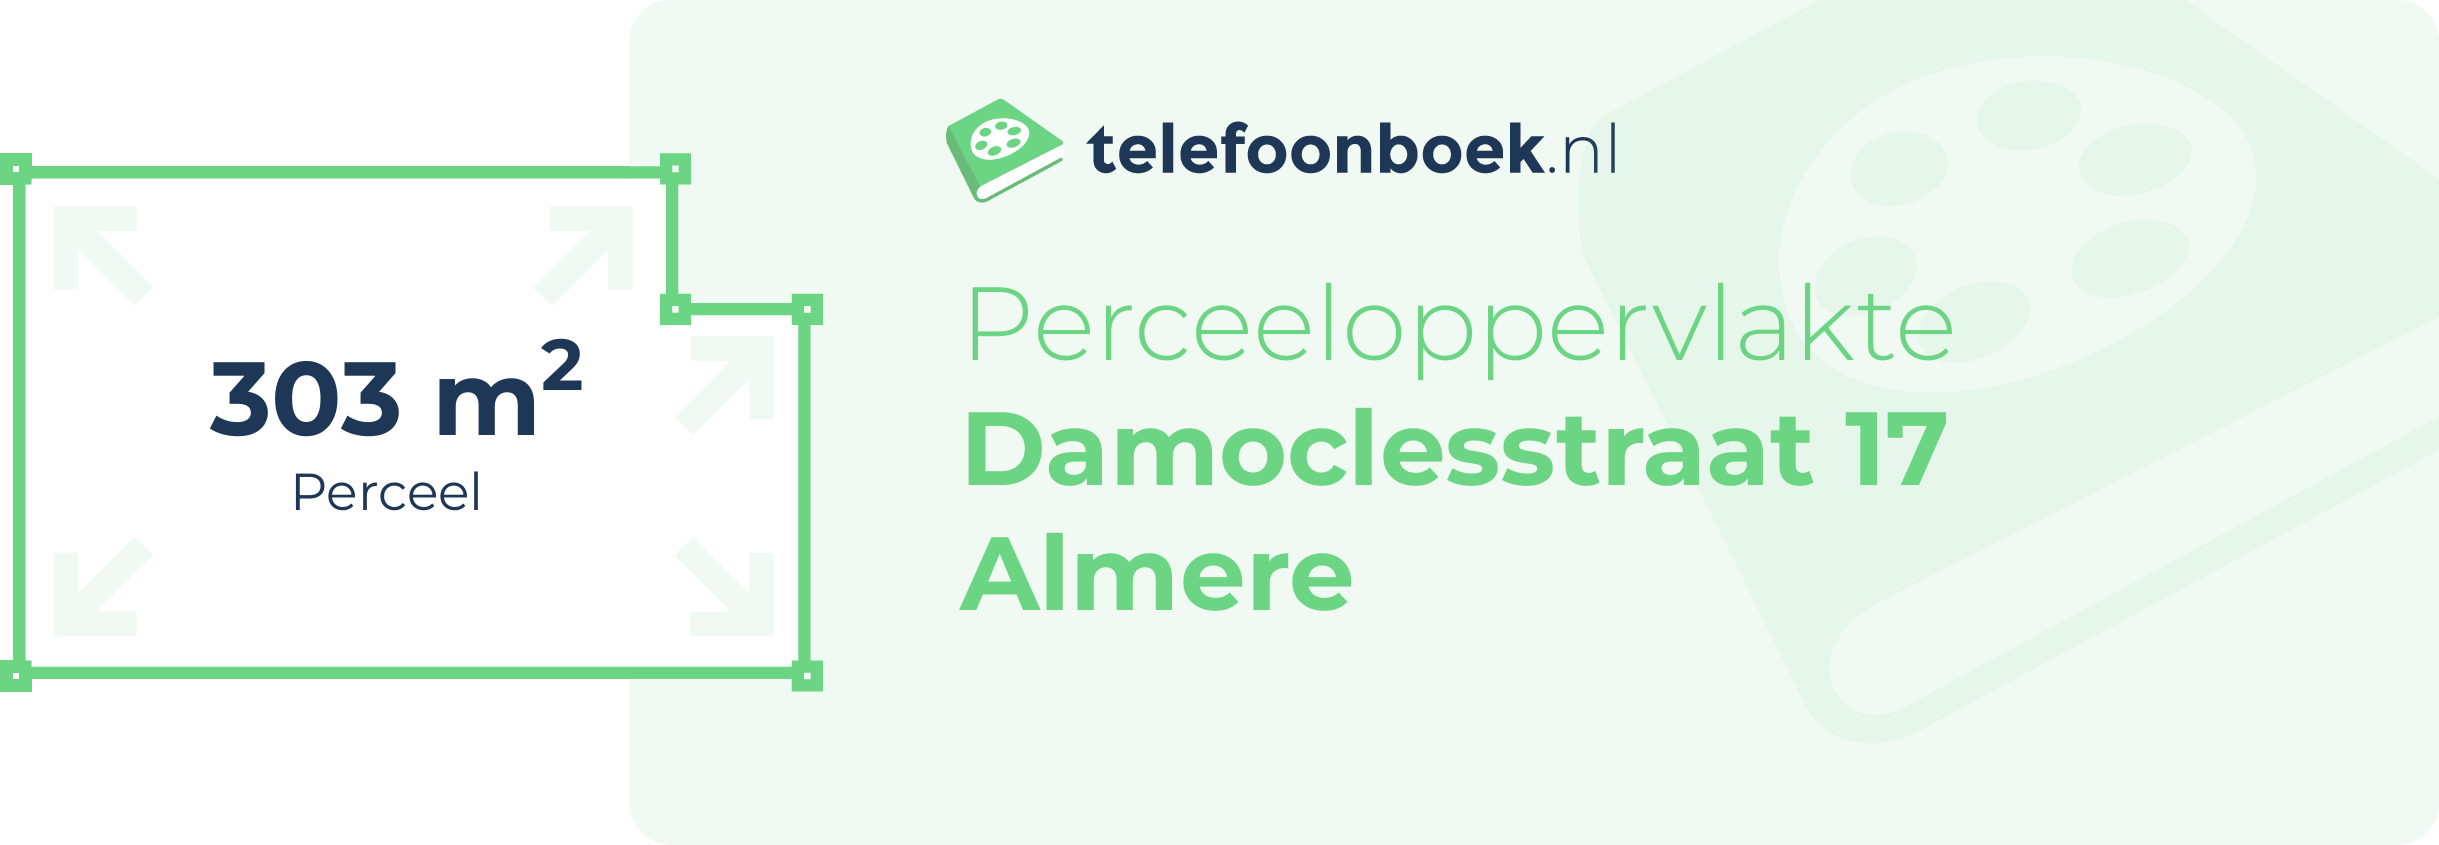 Perceeloppervlakte Damoclesstraat 17 Almere